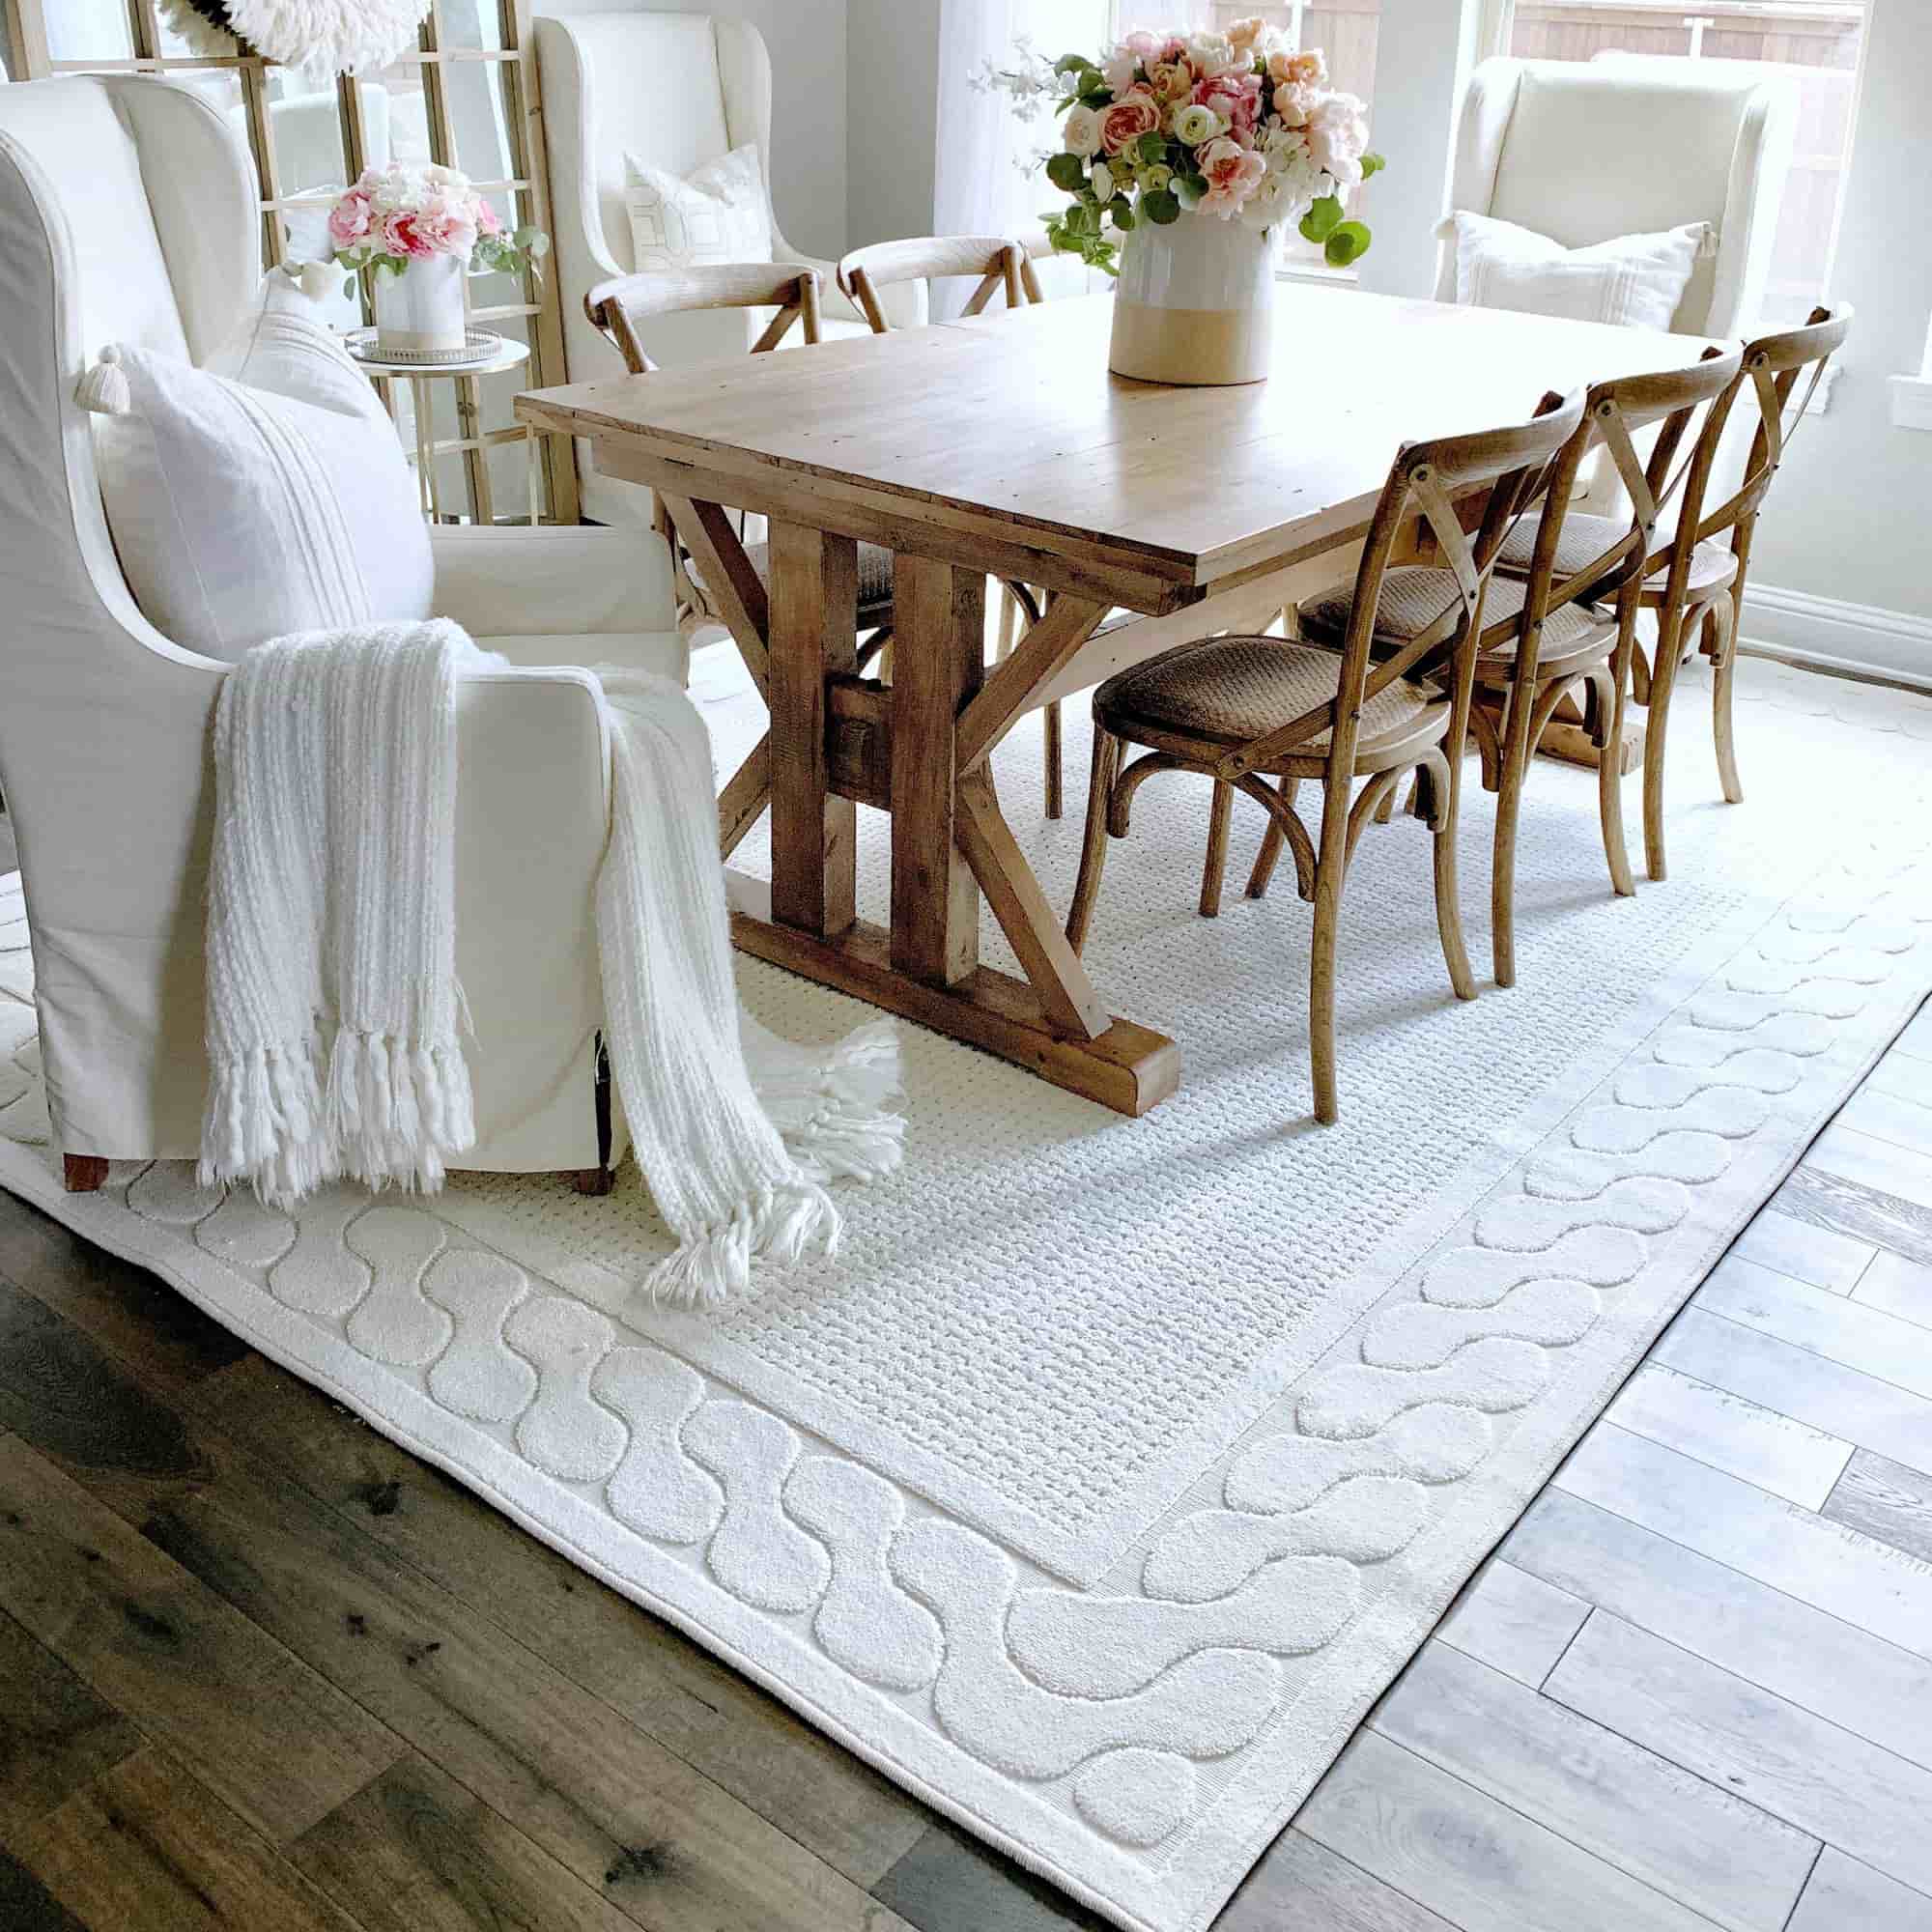 elegant white carpet under the dining table, wooden furniture, white chair, flower setting on table